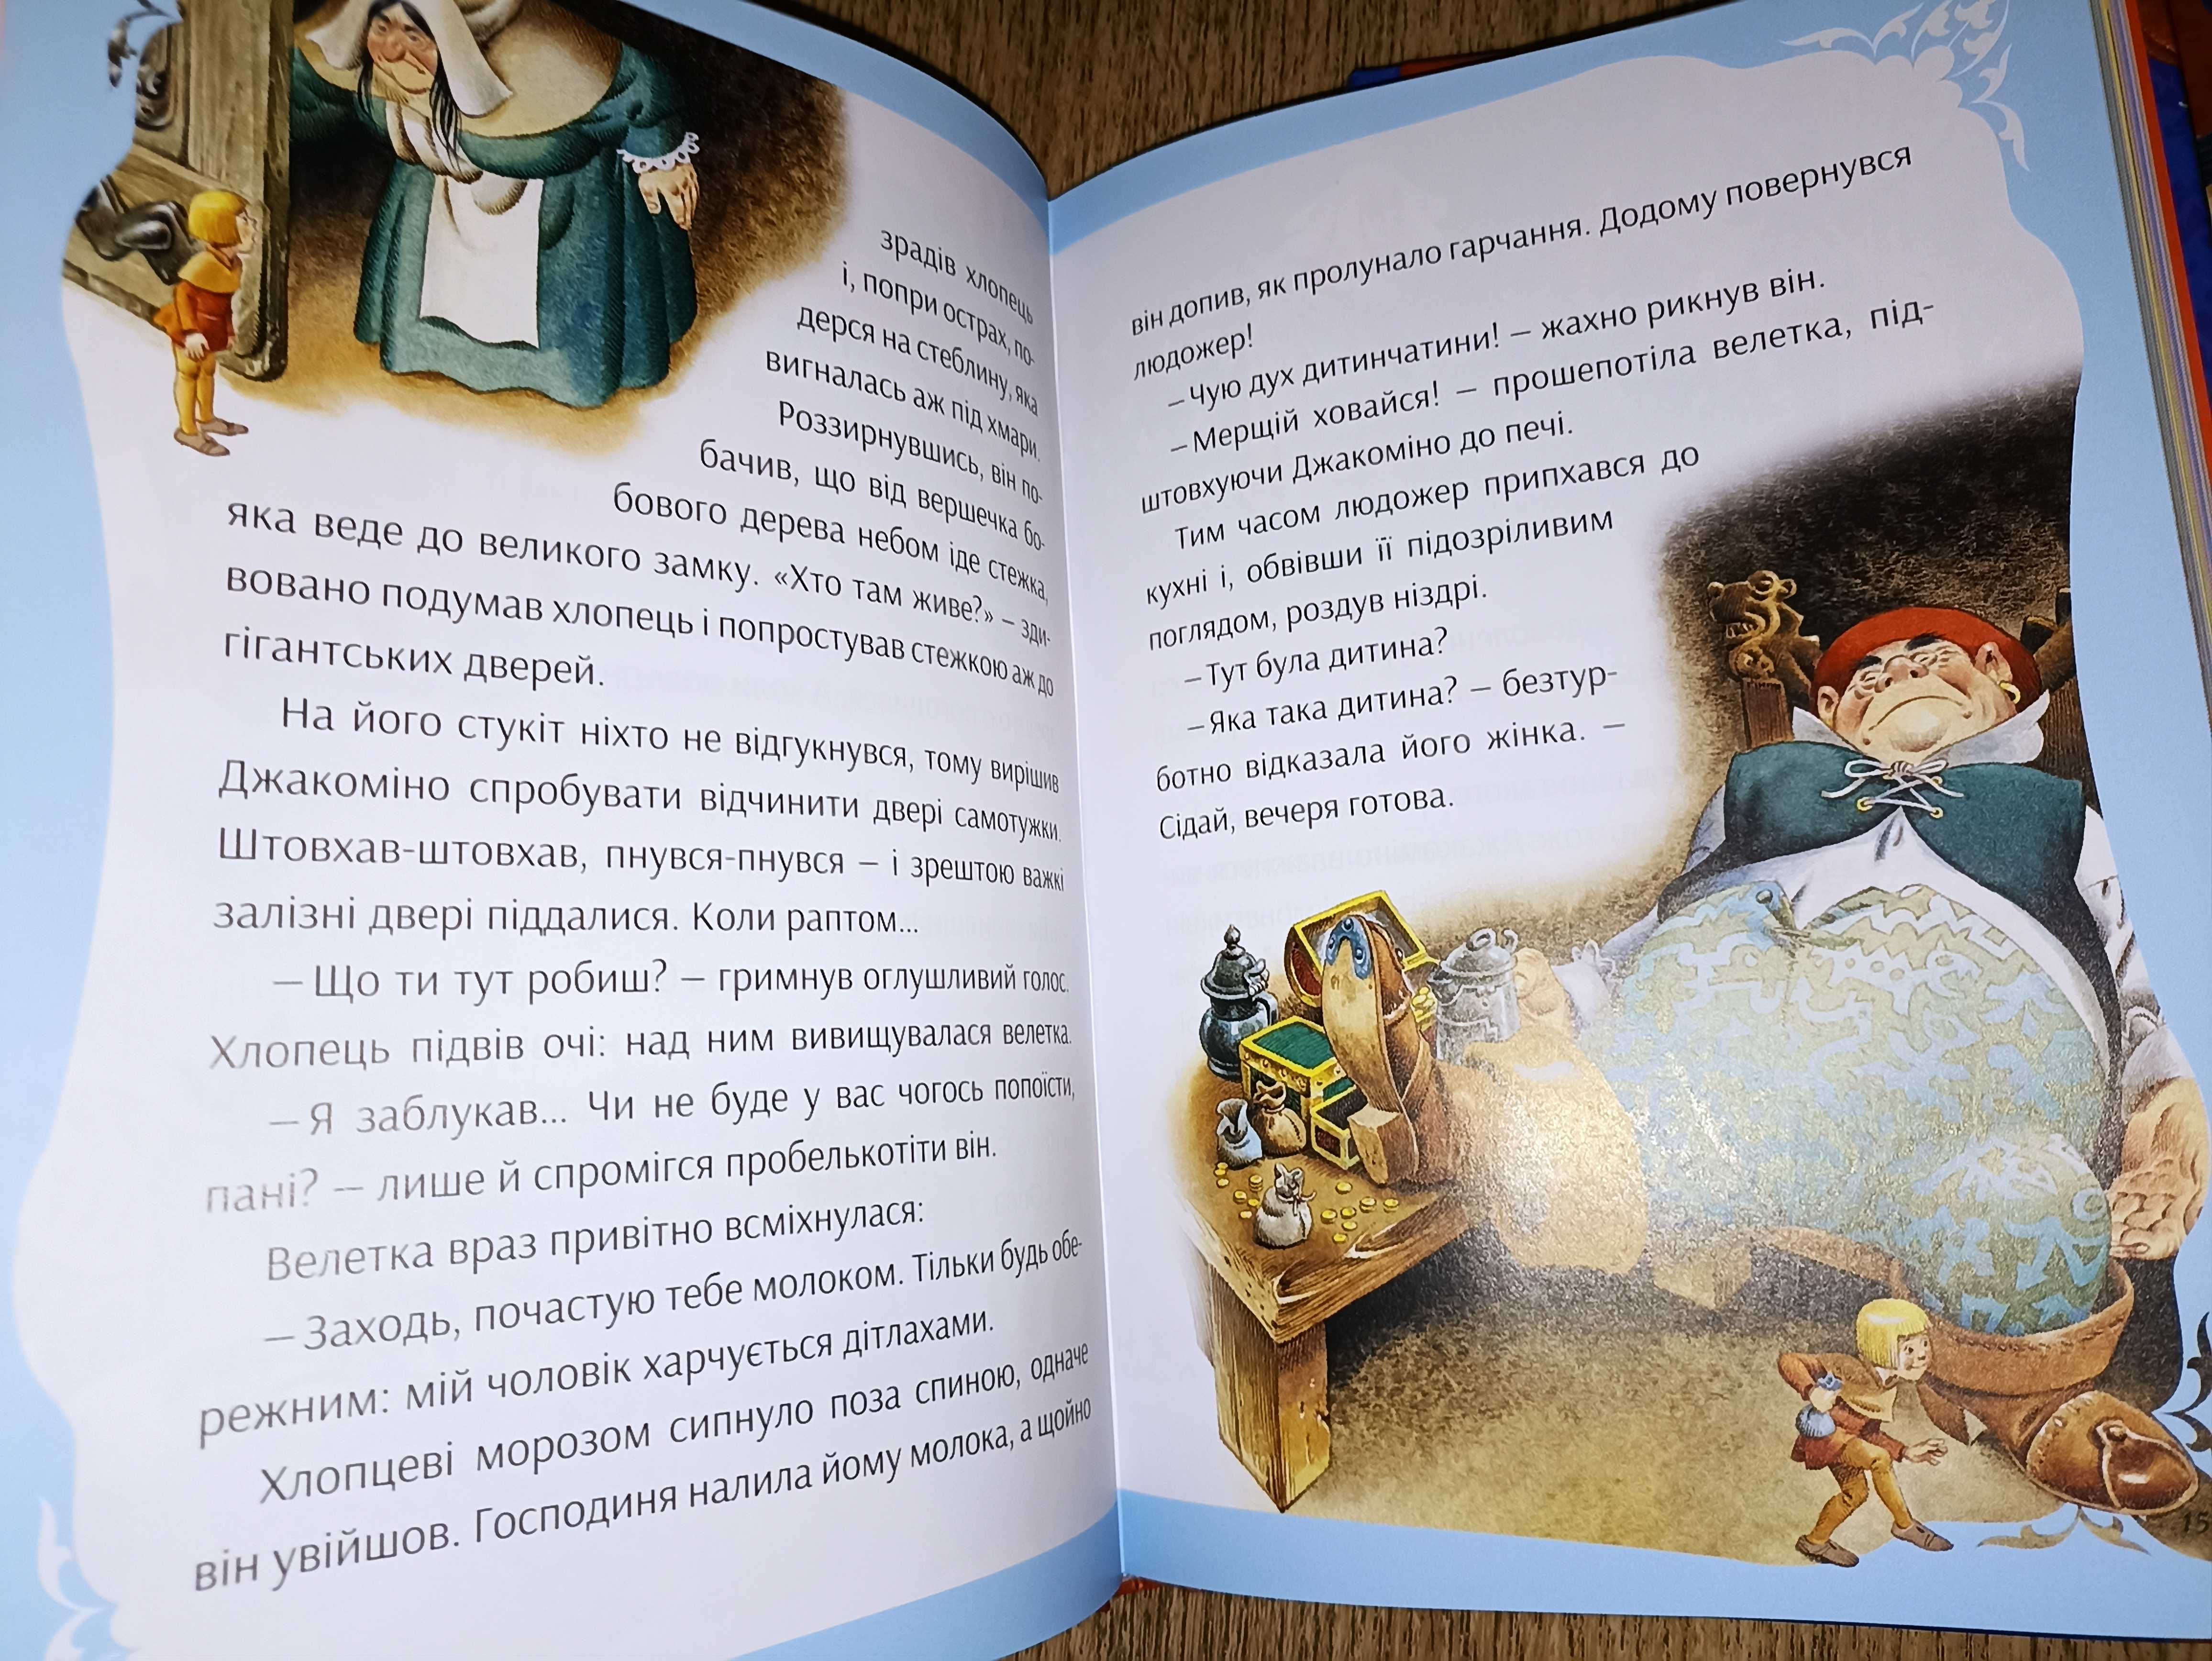 Тони Вульф лучшие сказки малышам 2кн  У світі улюблених чарівних казок